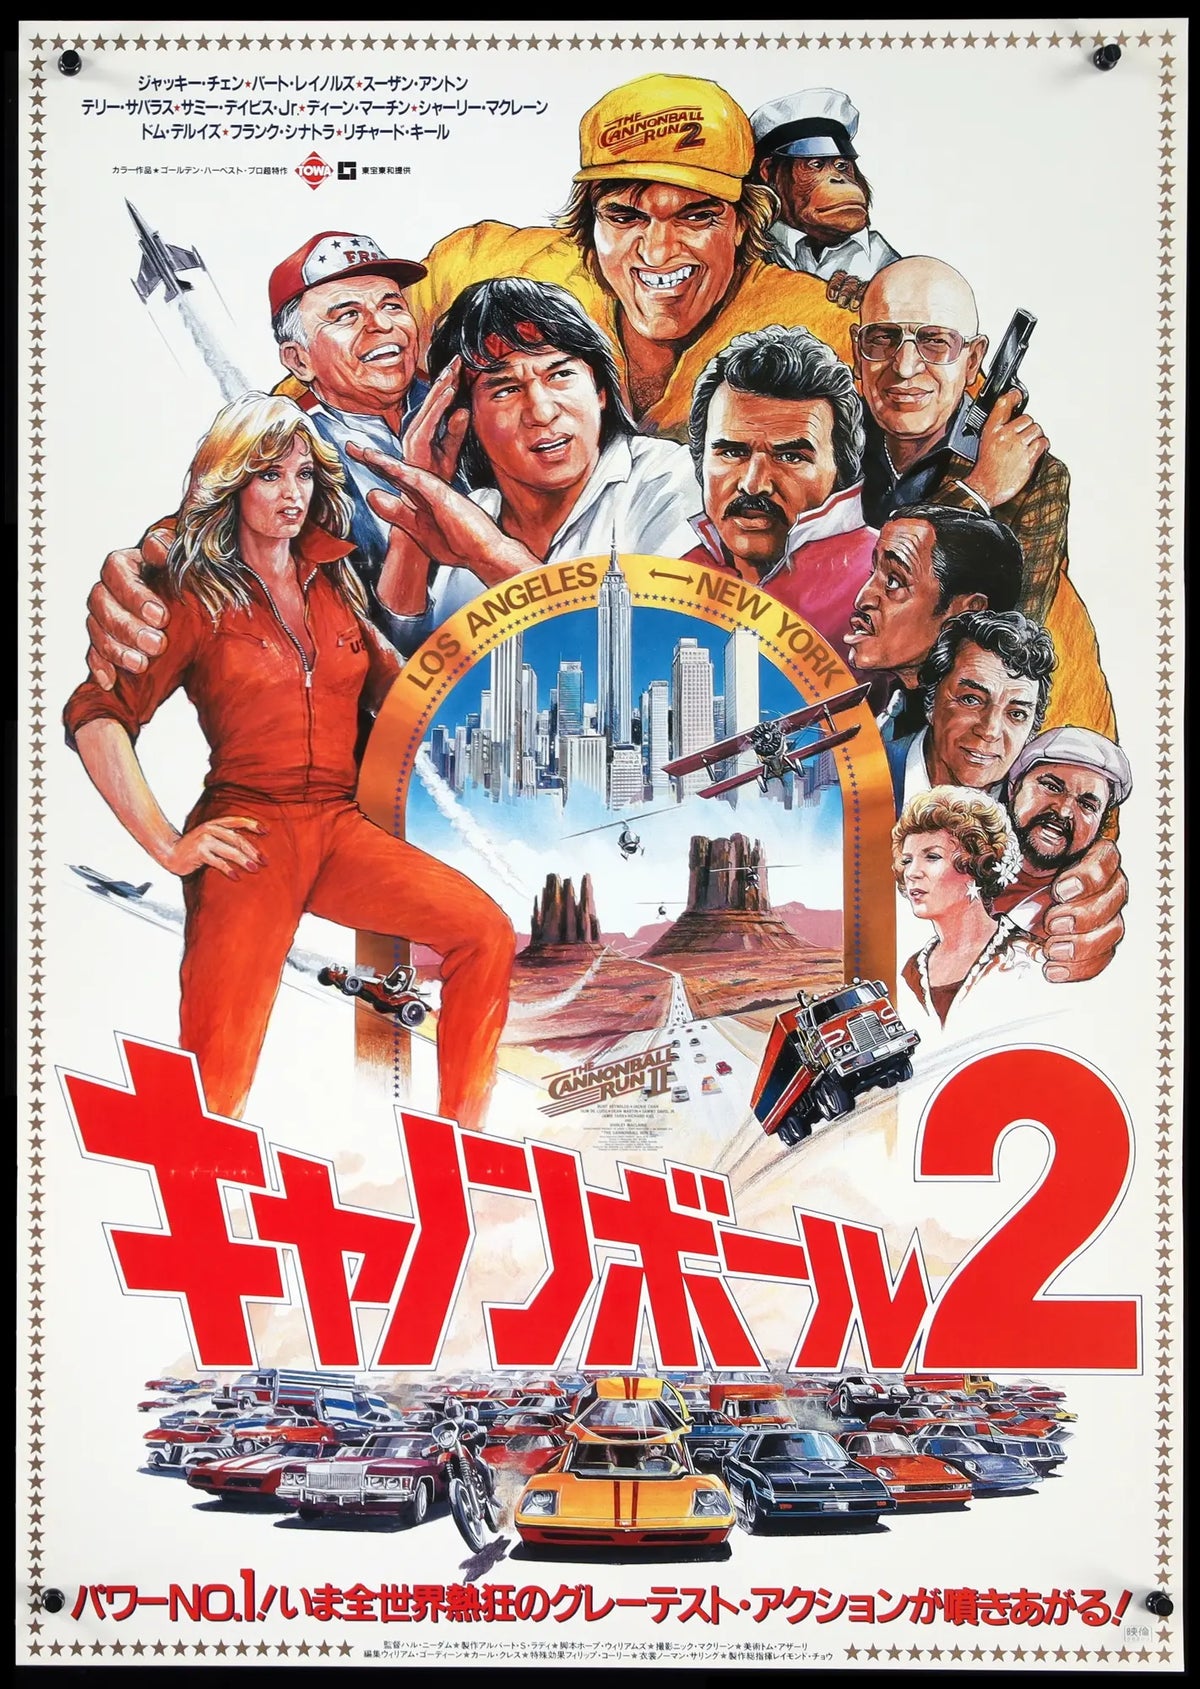 Cannonball Run 2 (1984) original movie poster for sale at Original Film Art